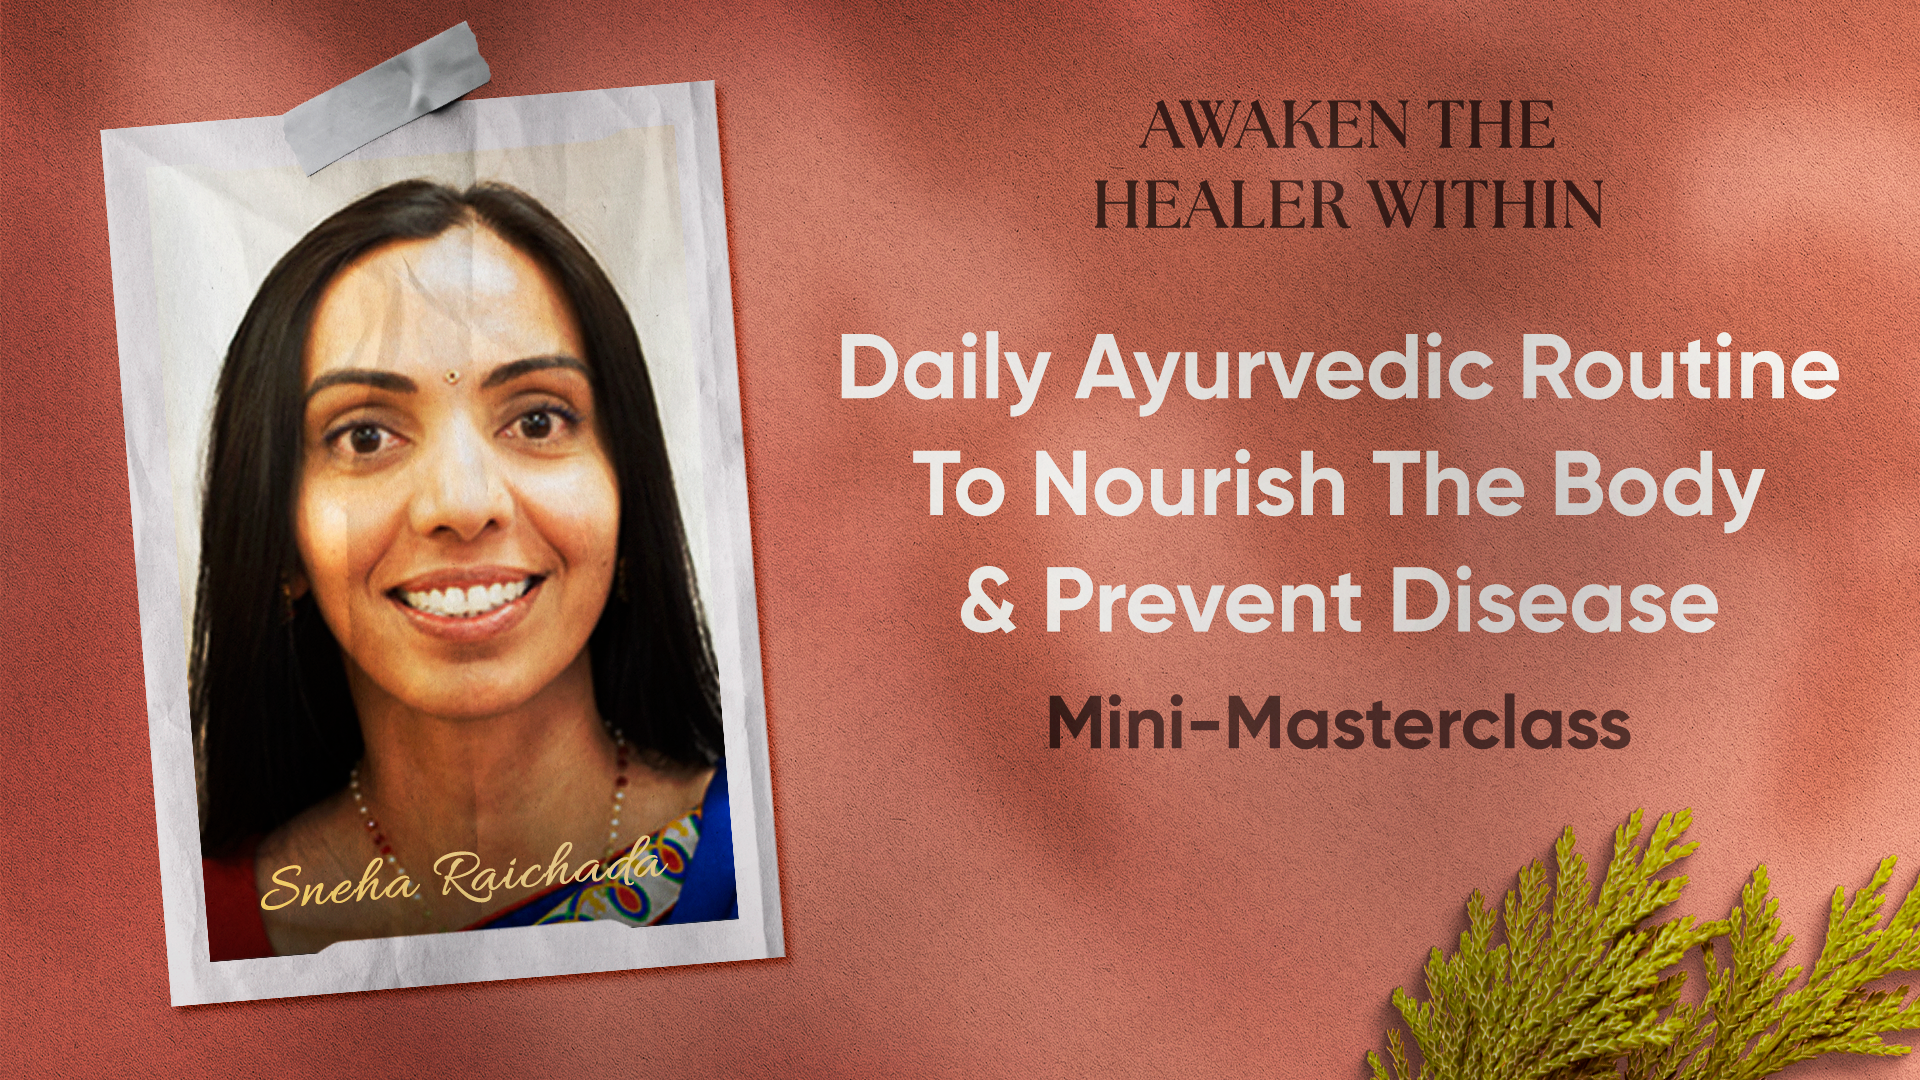 Daily Ayurvedic Routine To Nourish The Body & Prevent Disease